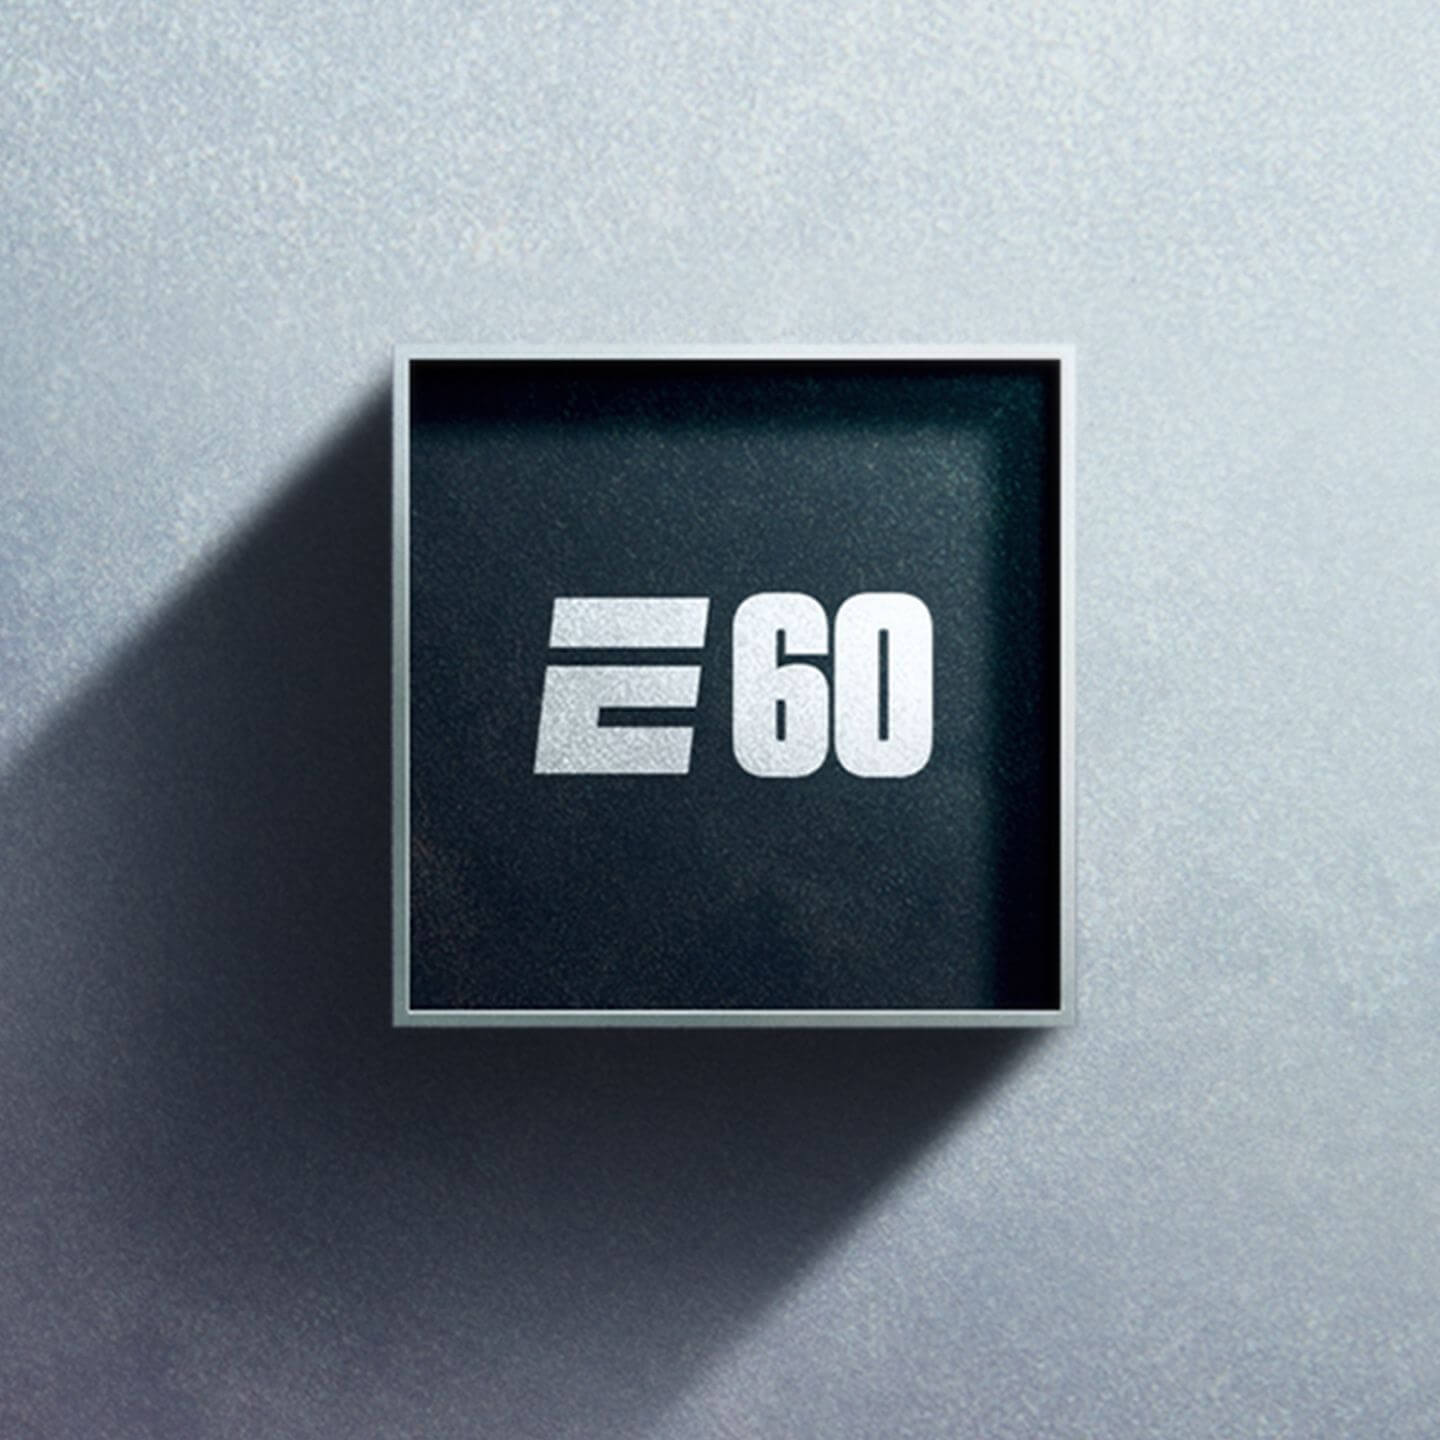 E60-espn-plus-shows